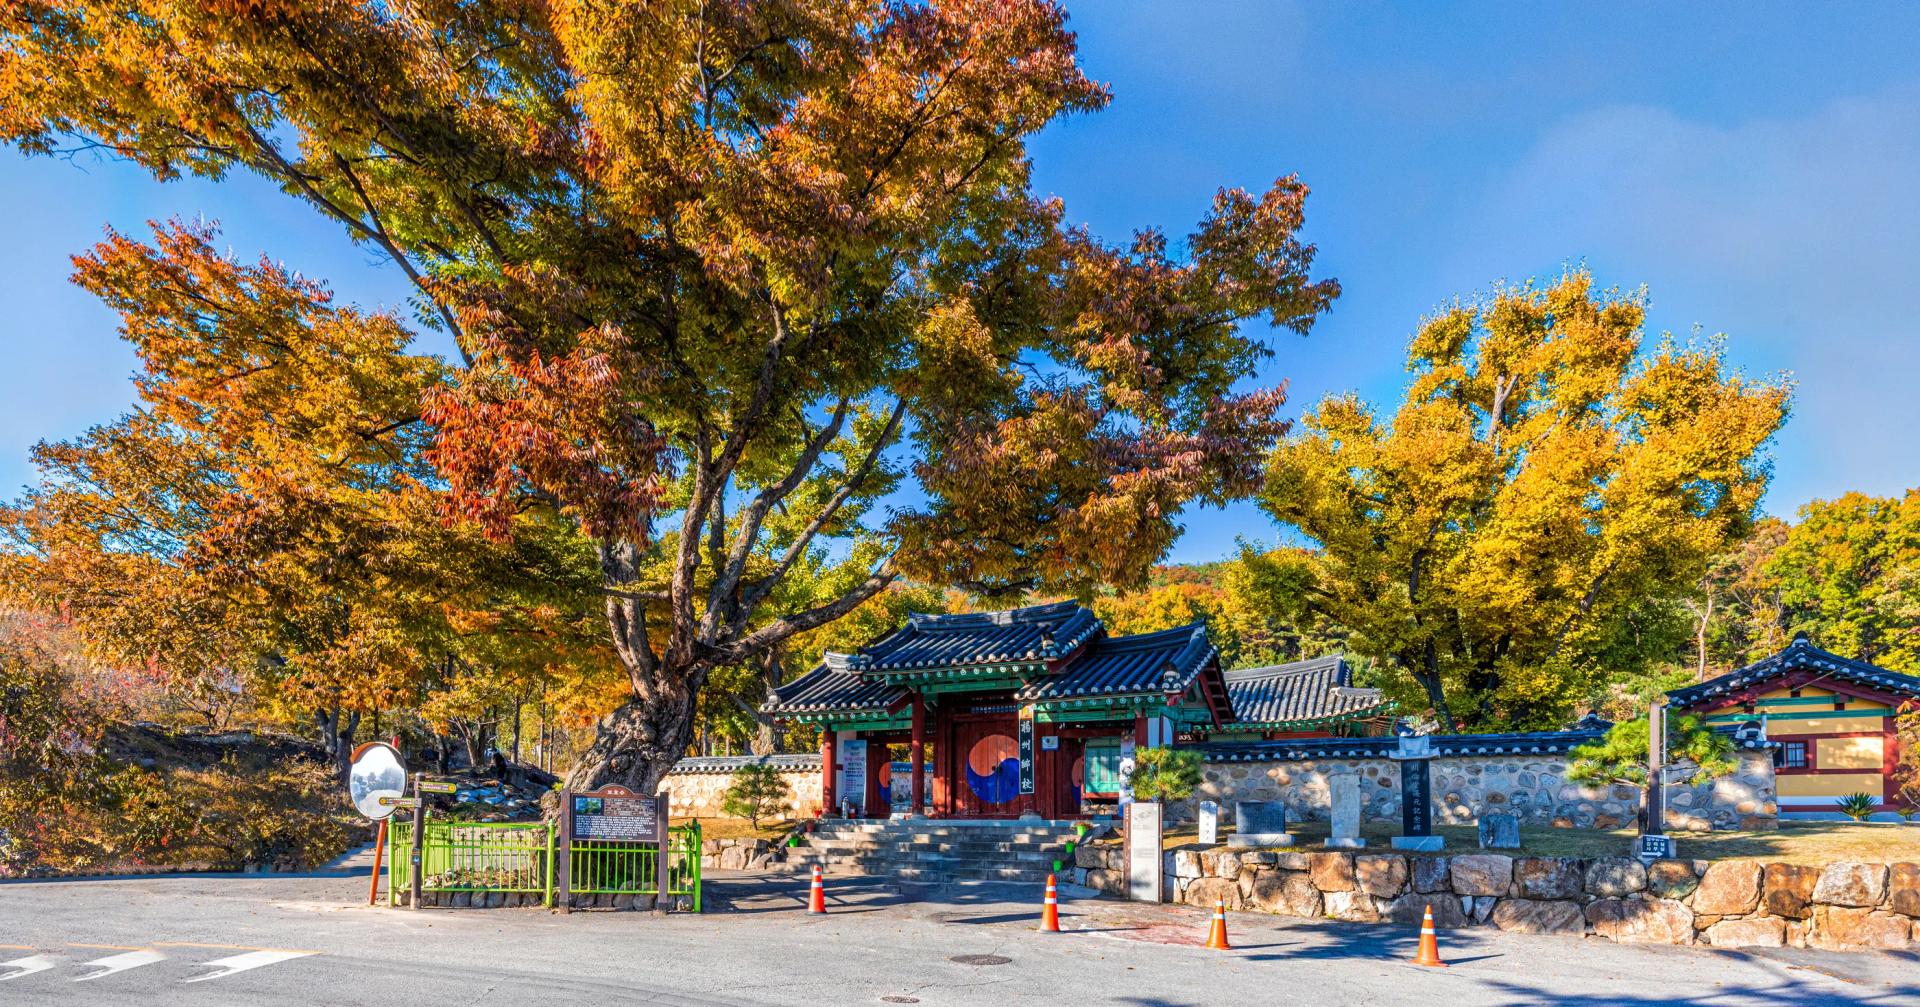 Jeonju Hanok Village & Jangtae Mountain/Daedunsan | Fall Foliage Day Tour